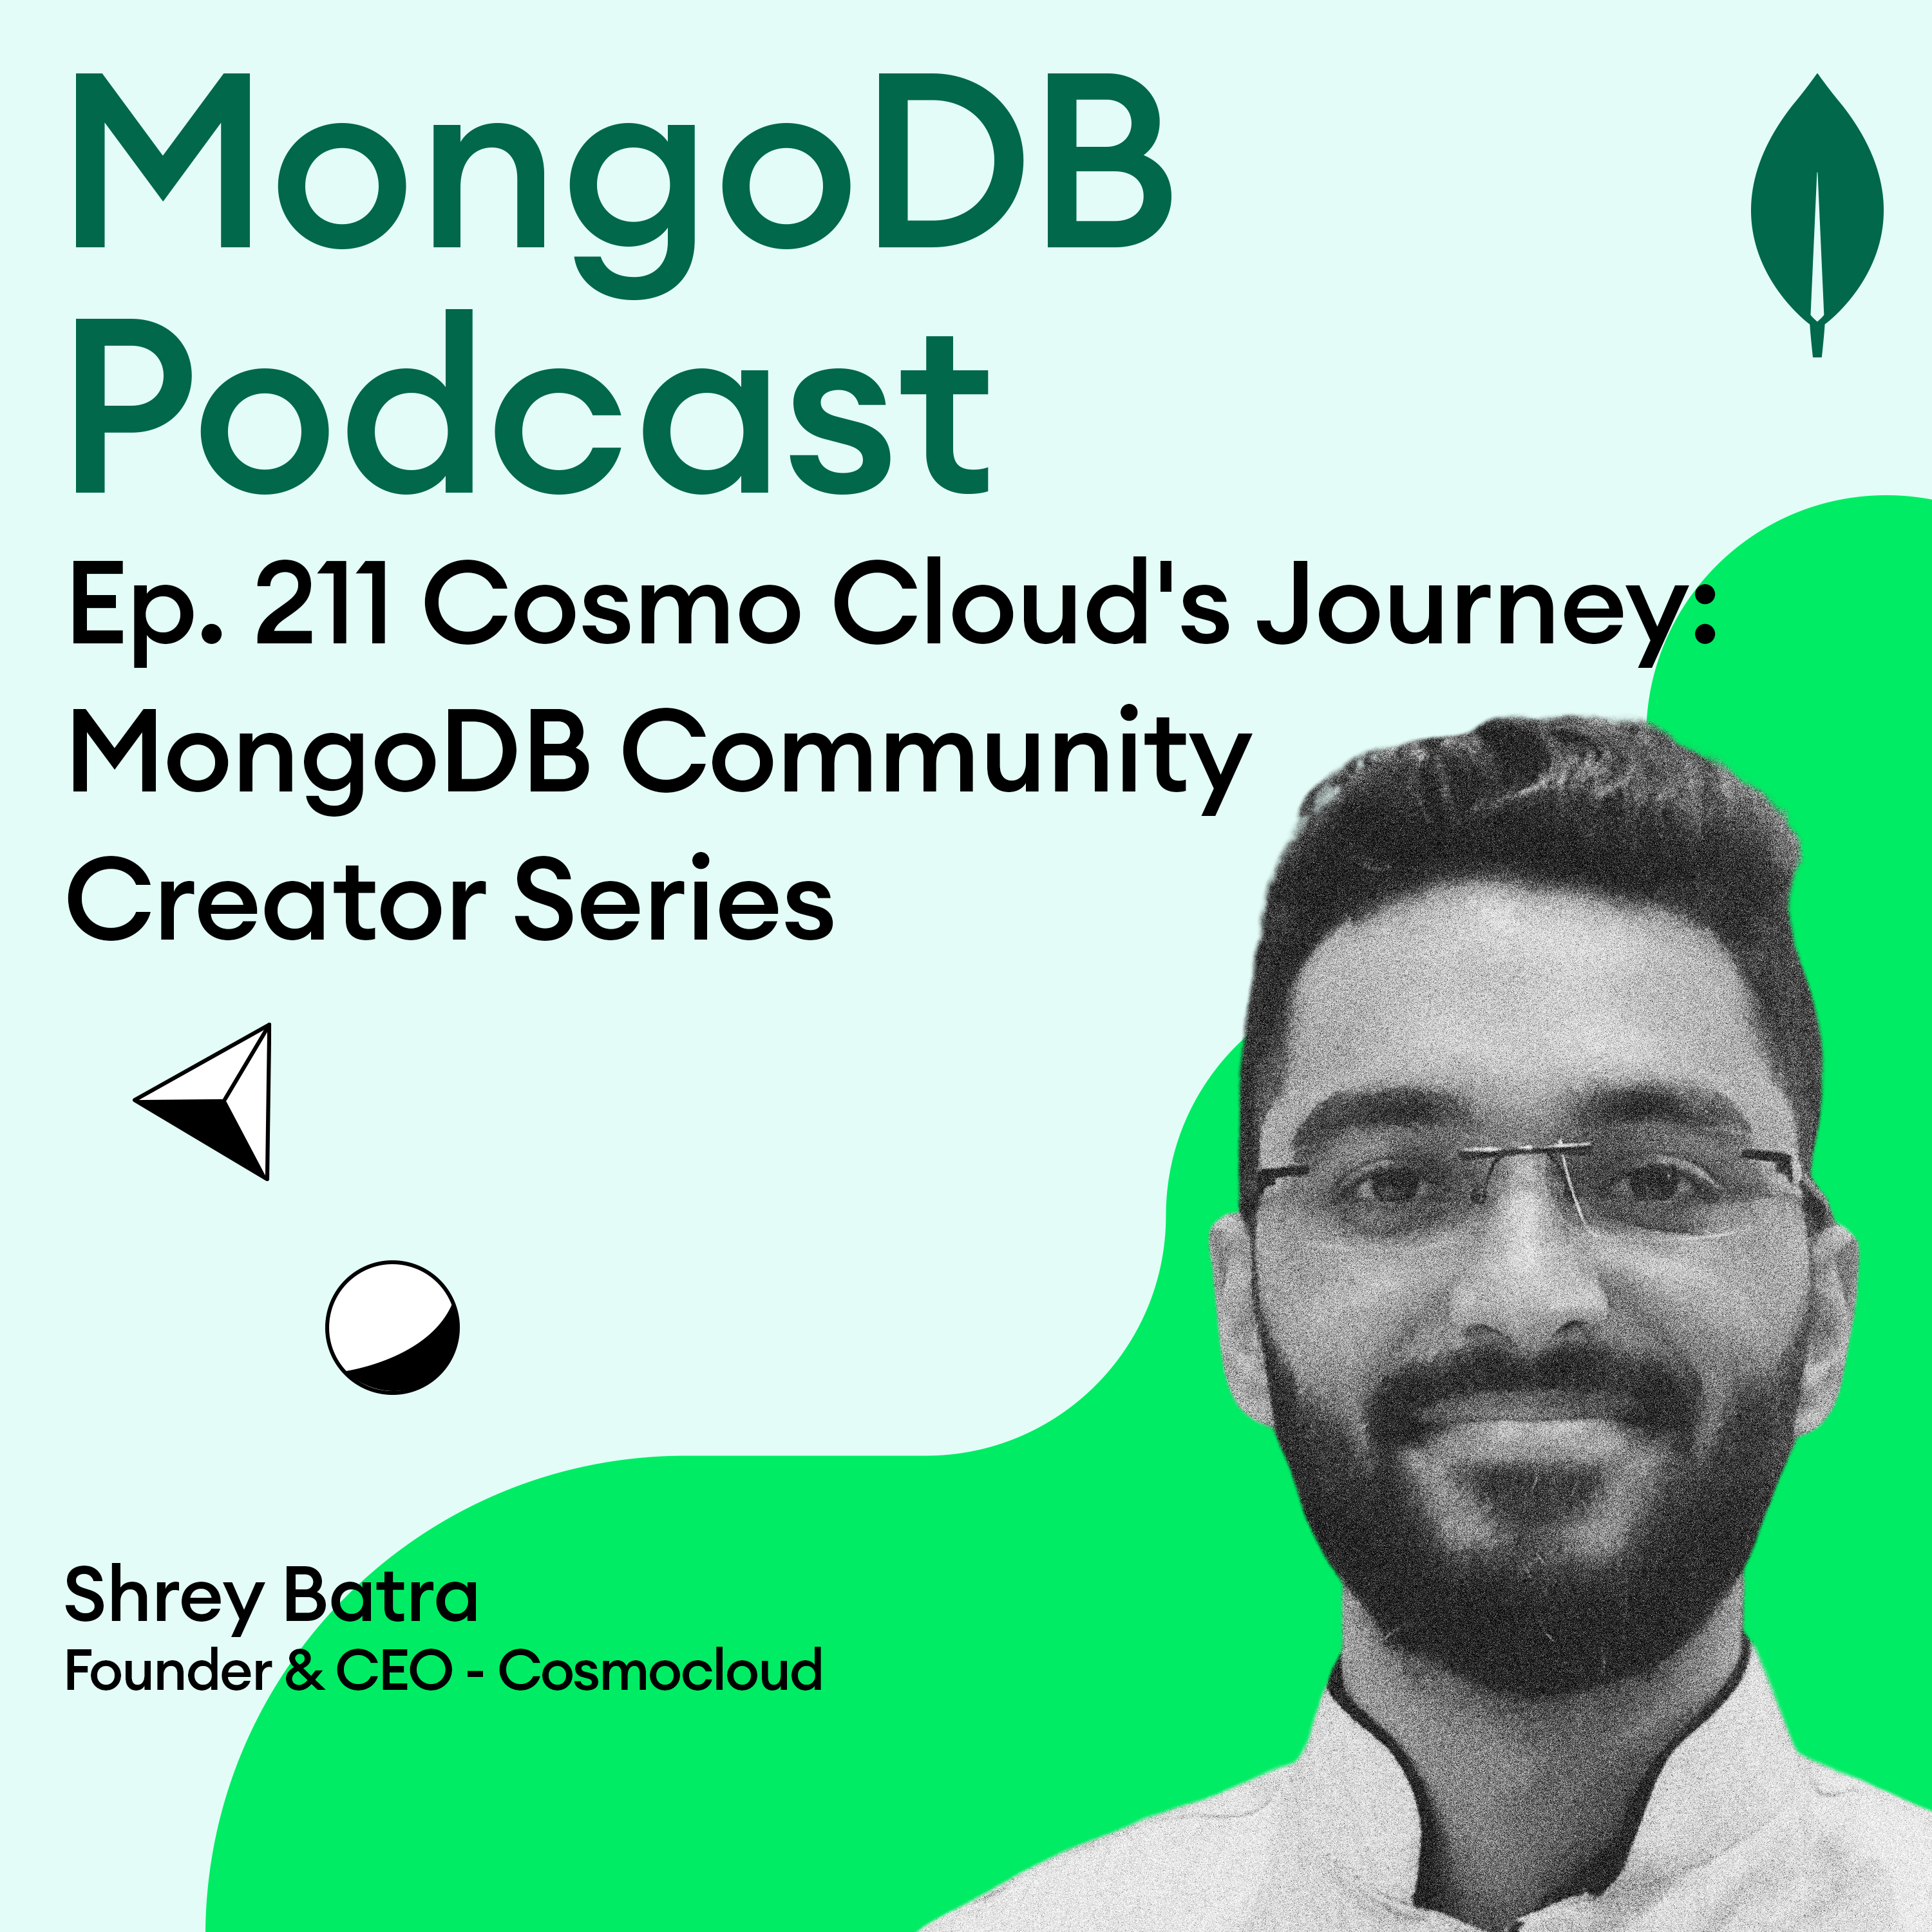 Ep. 211 Cosmo Cloud’s Journey: MongoDB Community Creator Series with Shrey Batra